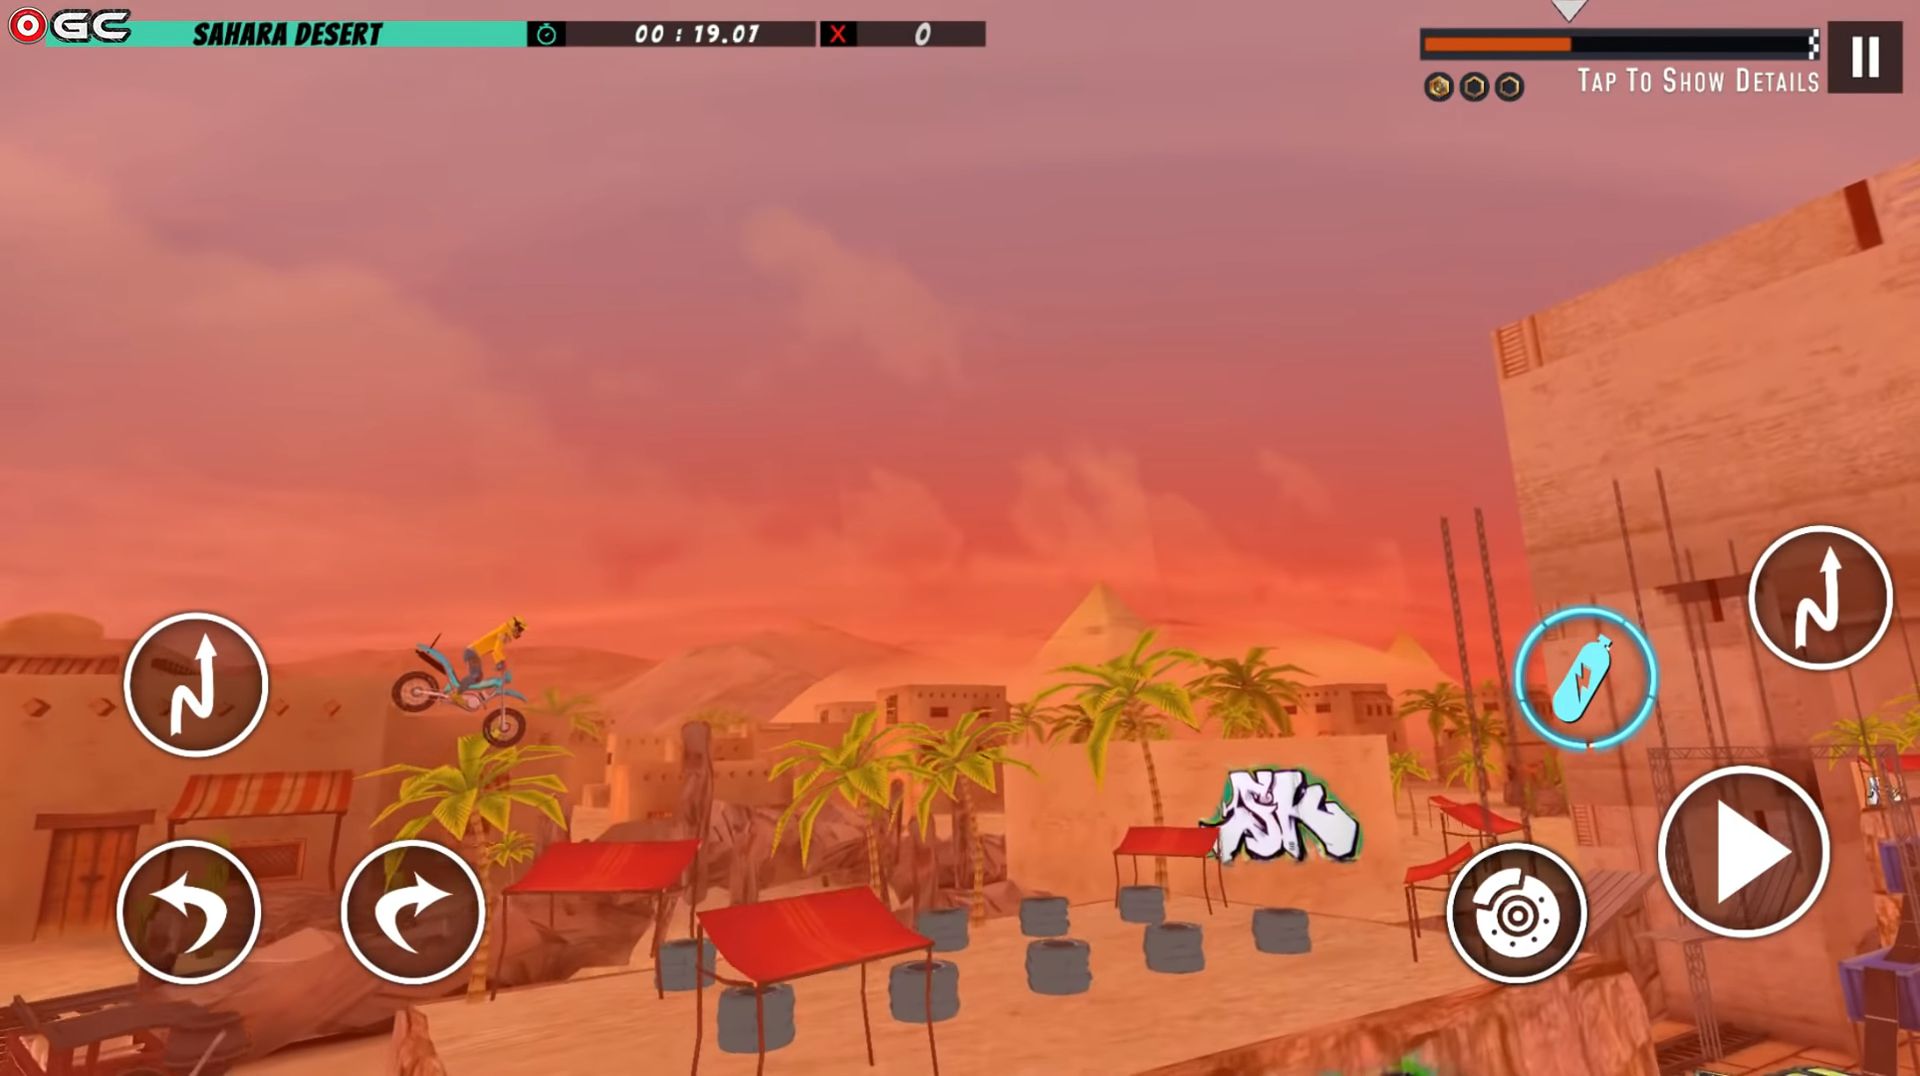 Bike Stunt 2 New Motorcycle Game - New Games 2020 screenshot 1